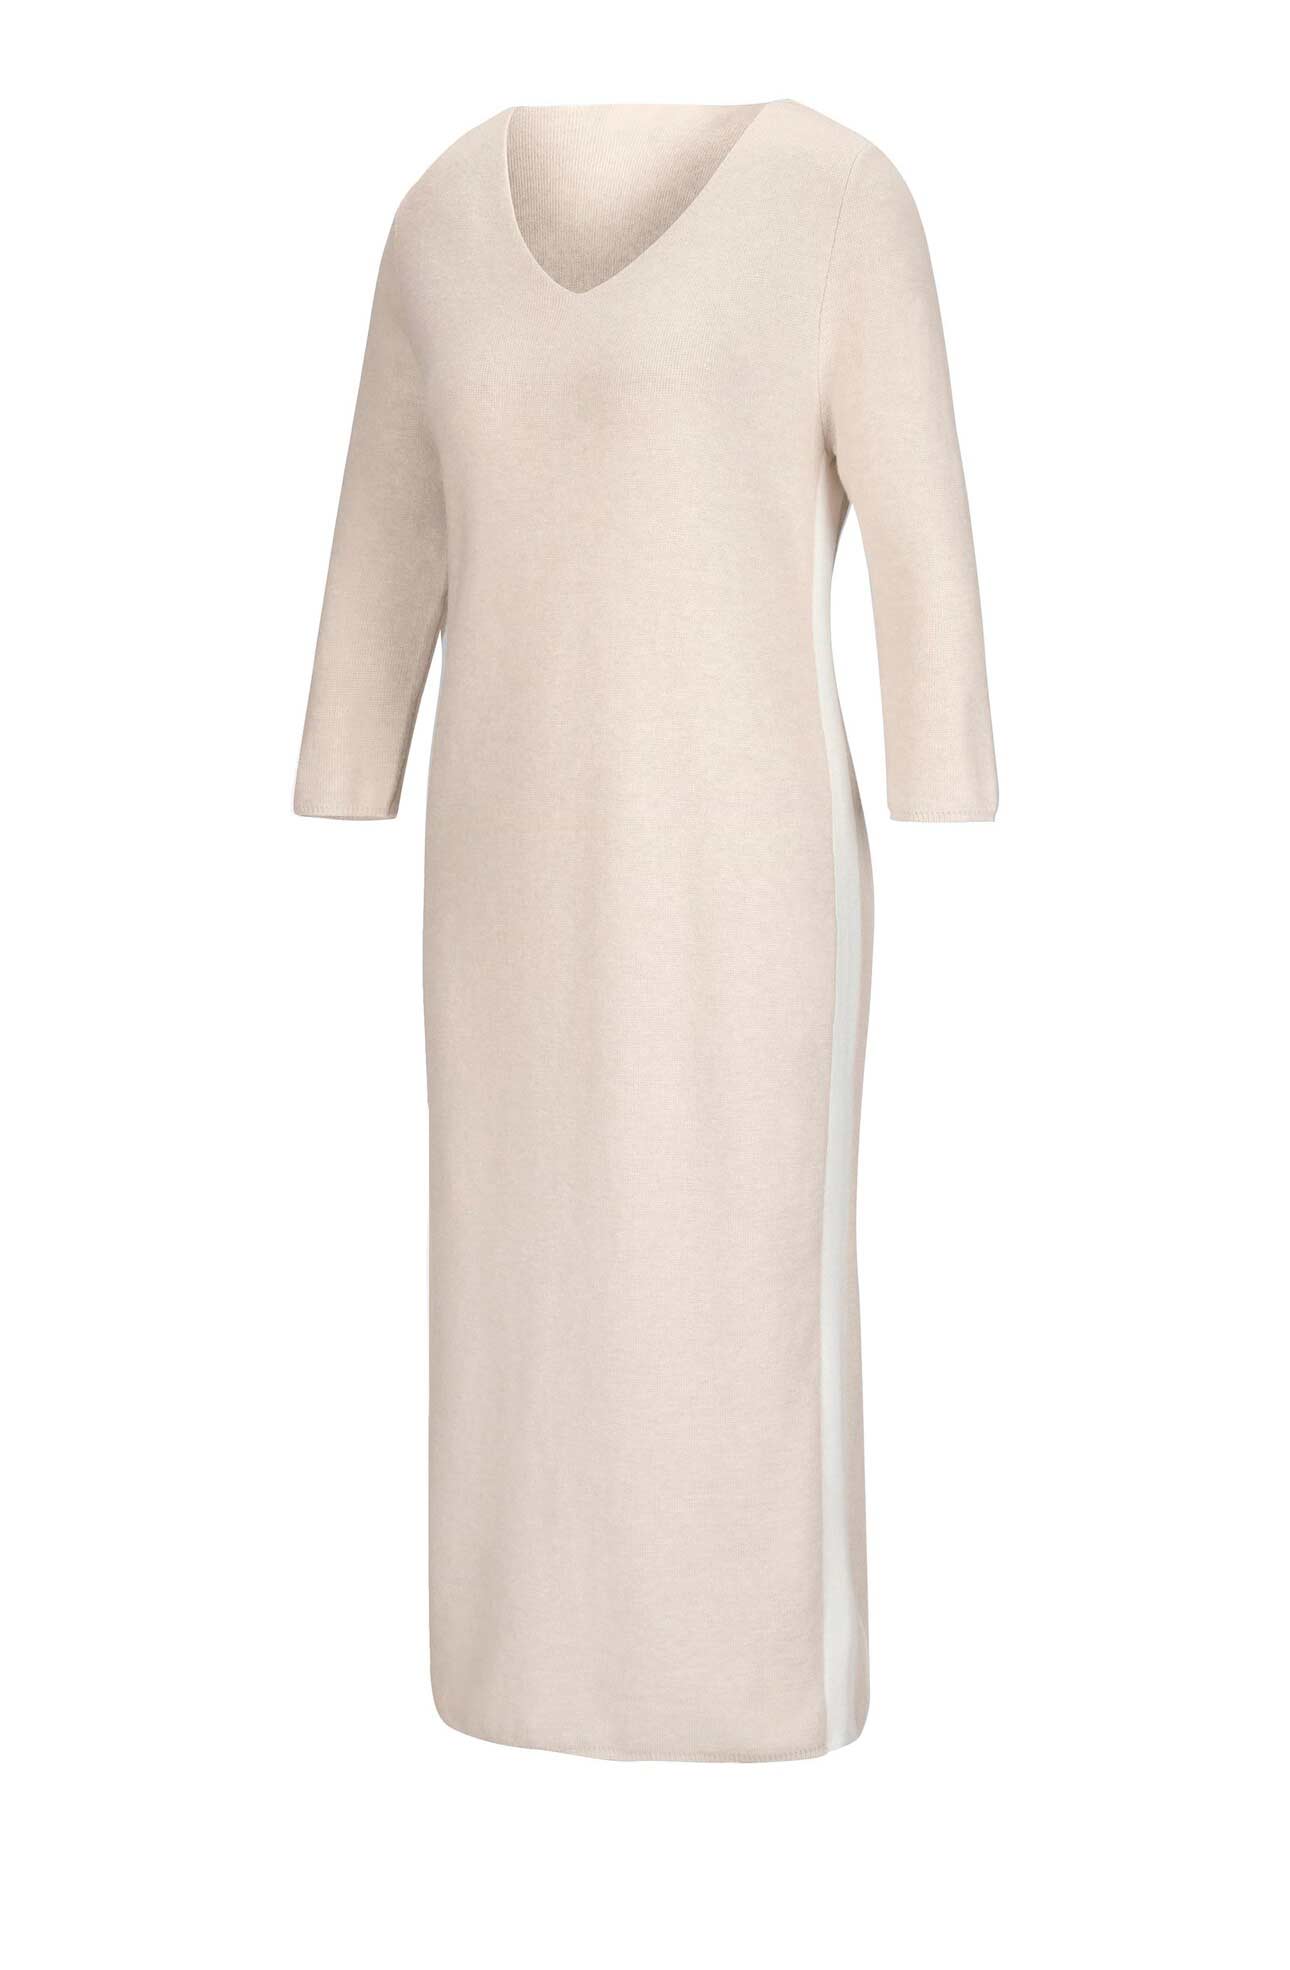 Strick beige-melange | Pulloverkleid missforty Kleid